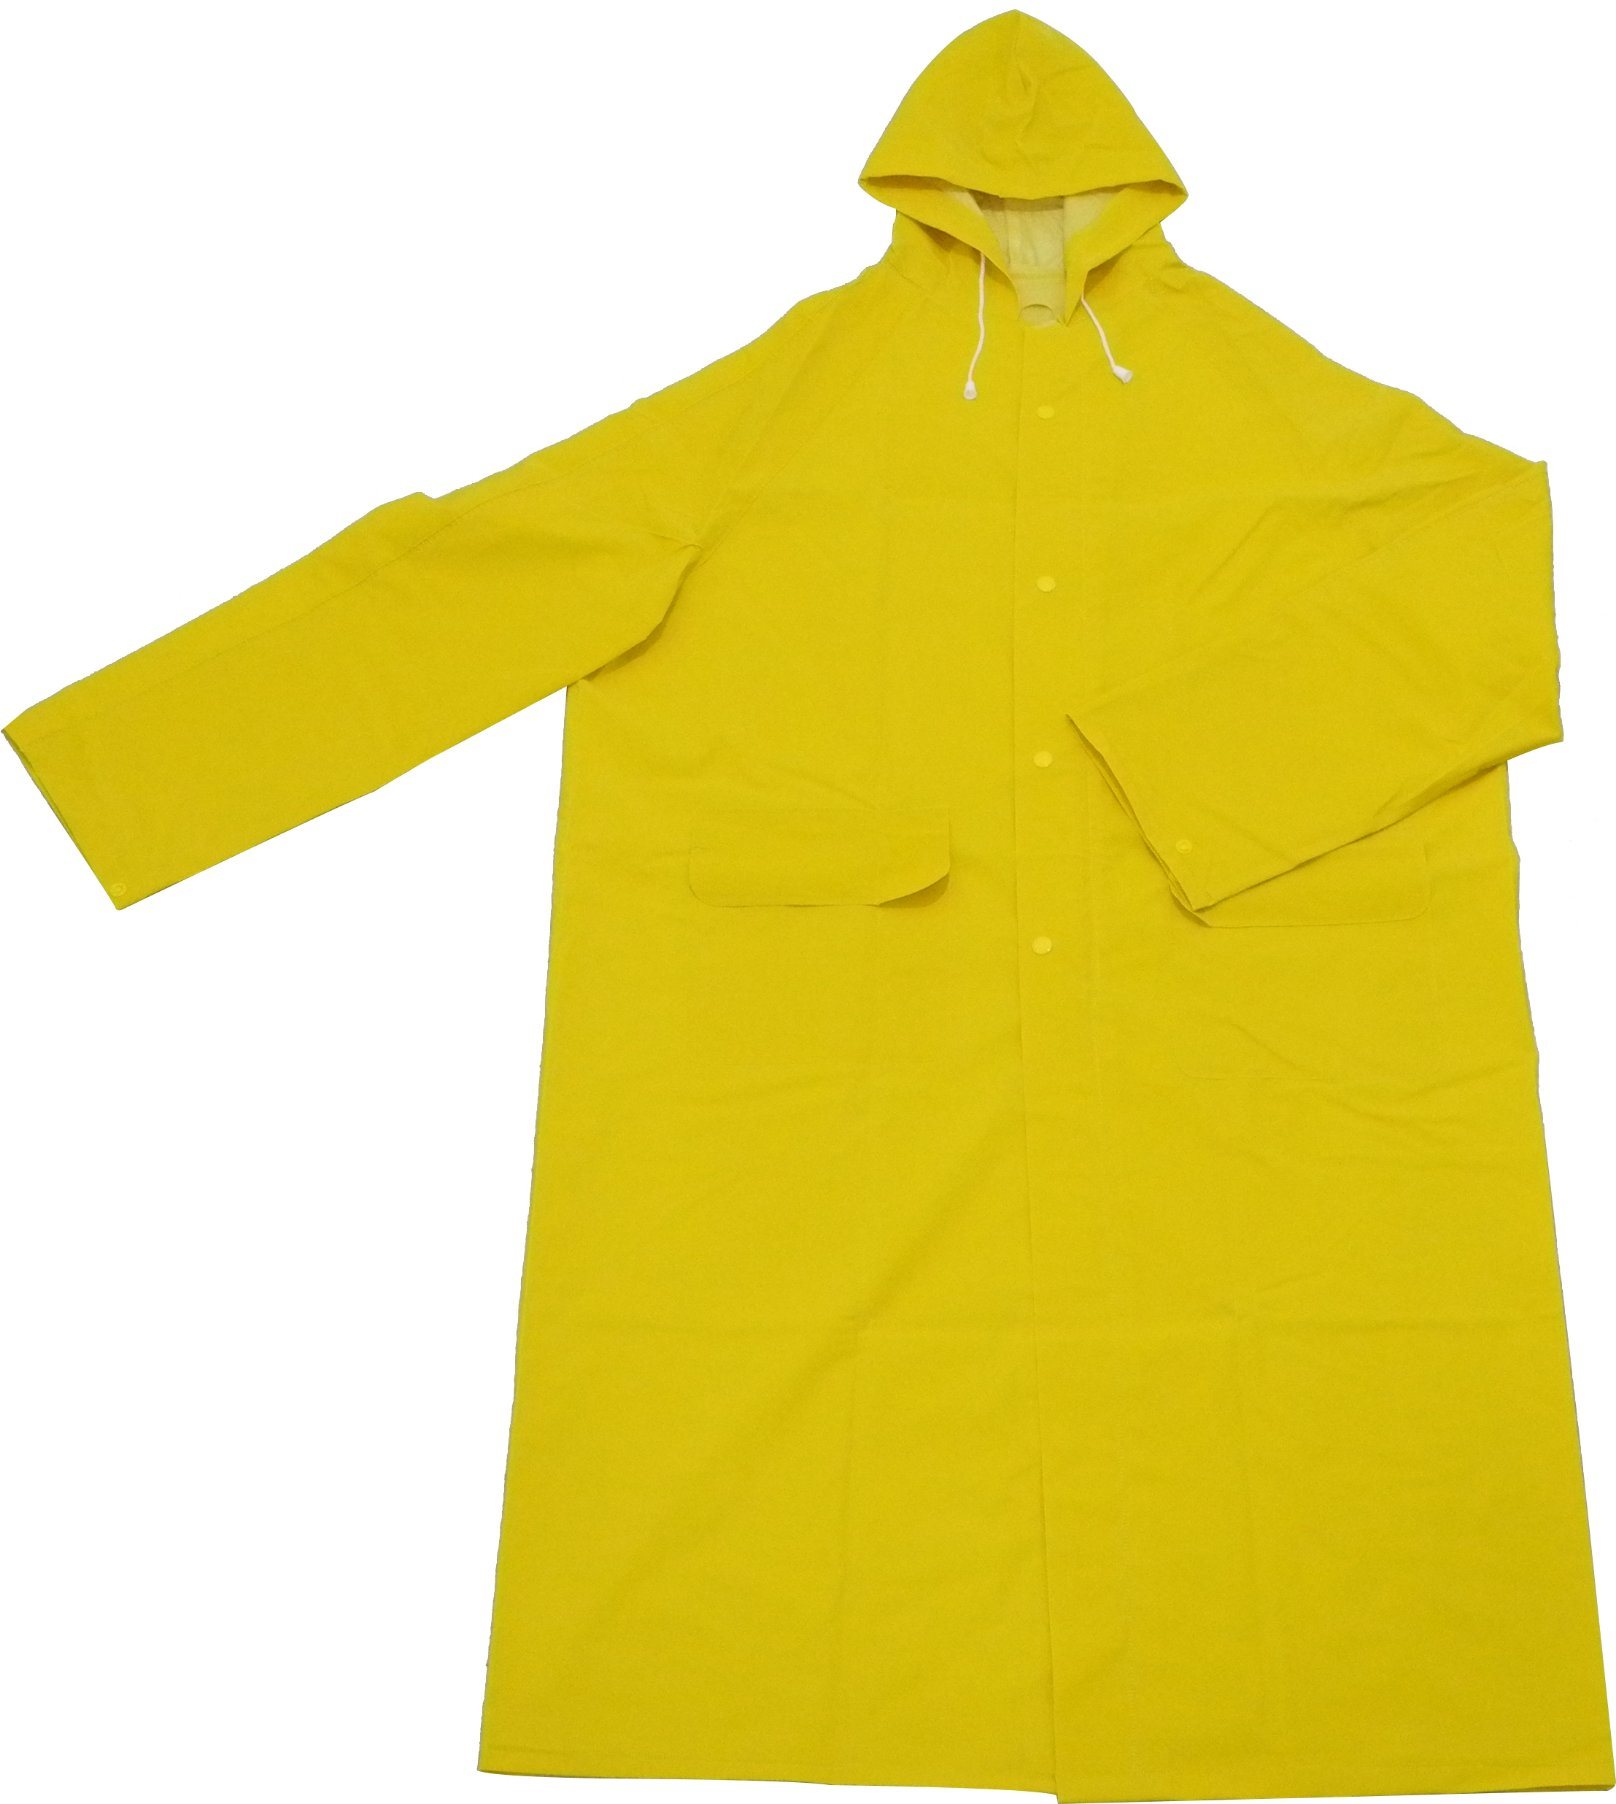 Raincoat with Hoods